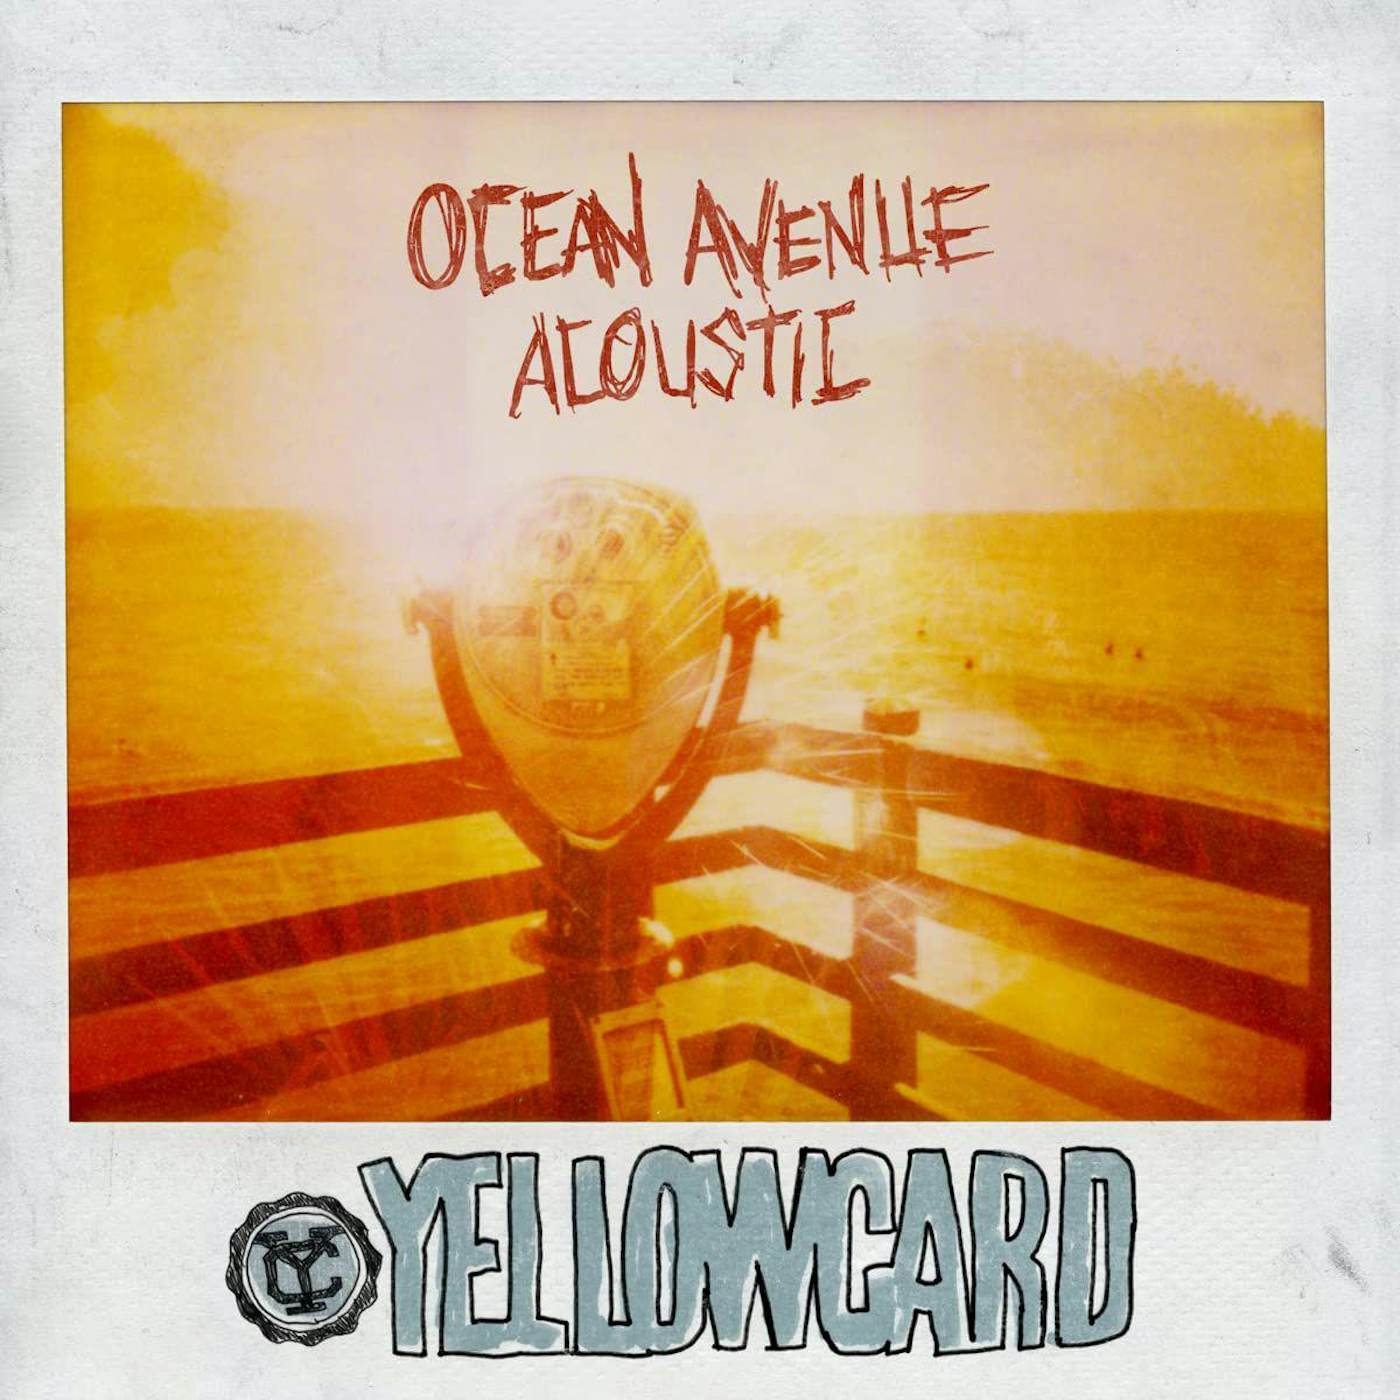 Yellowcard Ocean Avenue Acoustic Vinyl Record